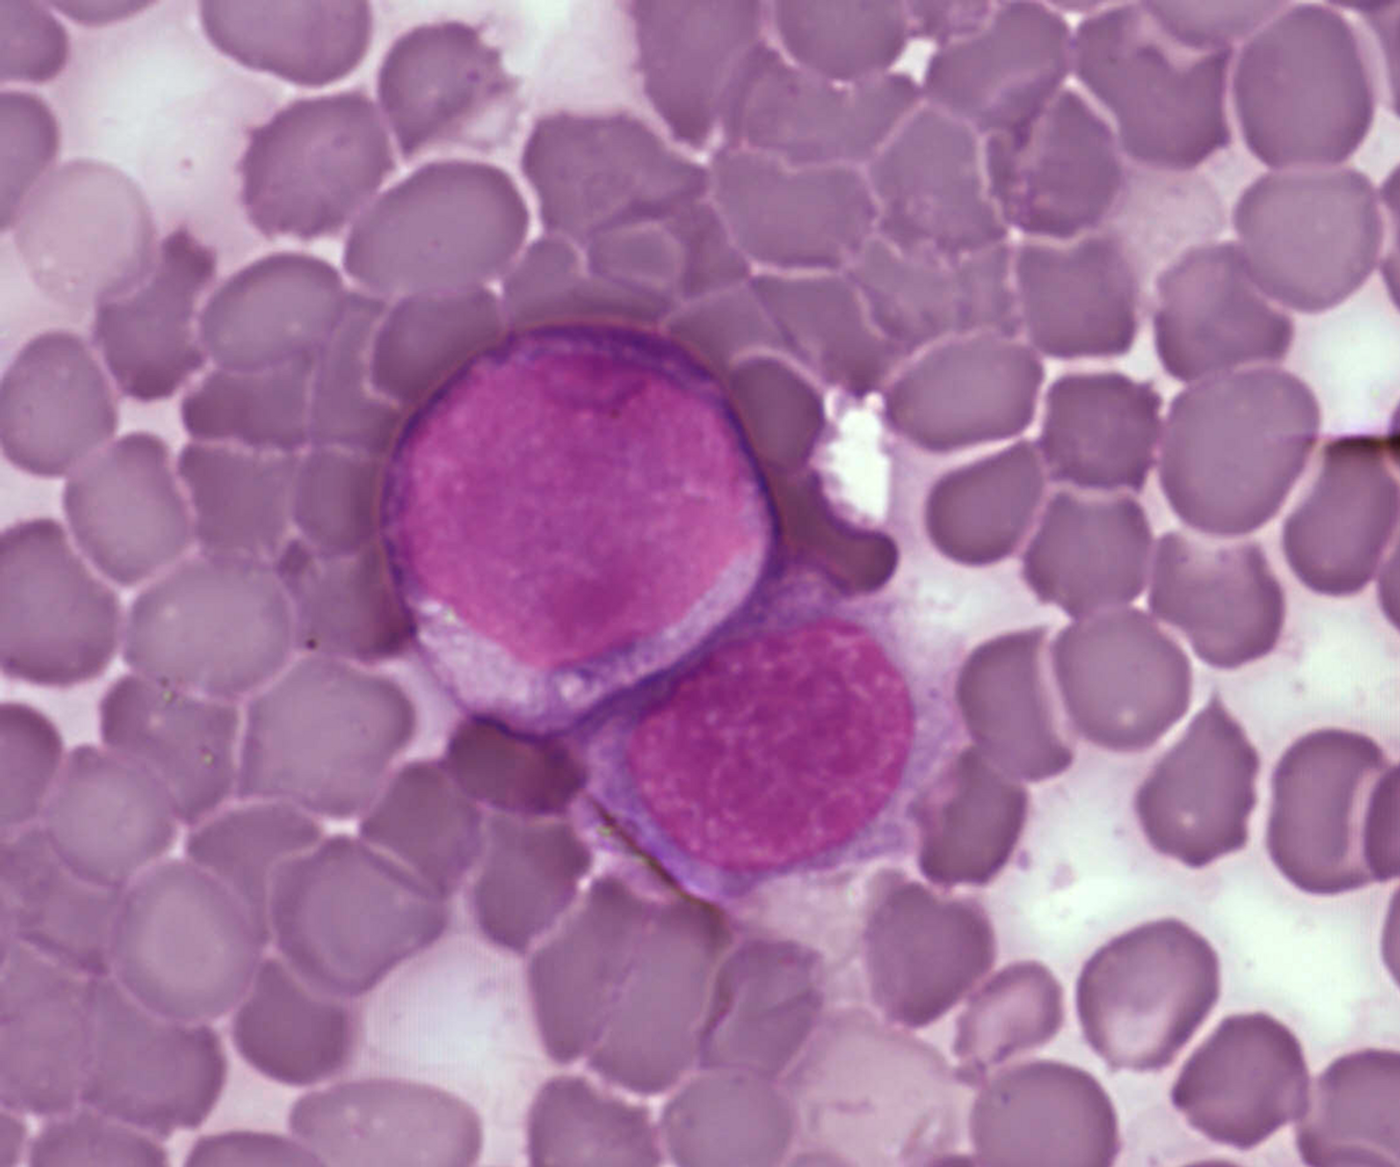 Leukemia cells. / Credit: A Surprising New Path to Tumor Development. PLoS Biol 3/12/2005 doi:10.1371/journal.pbio.0030433